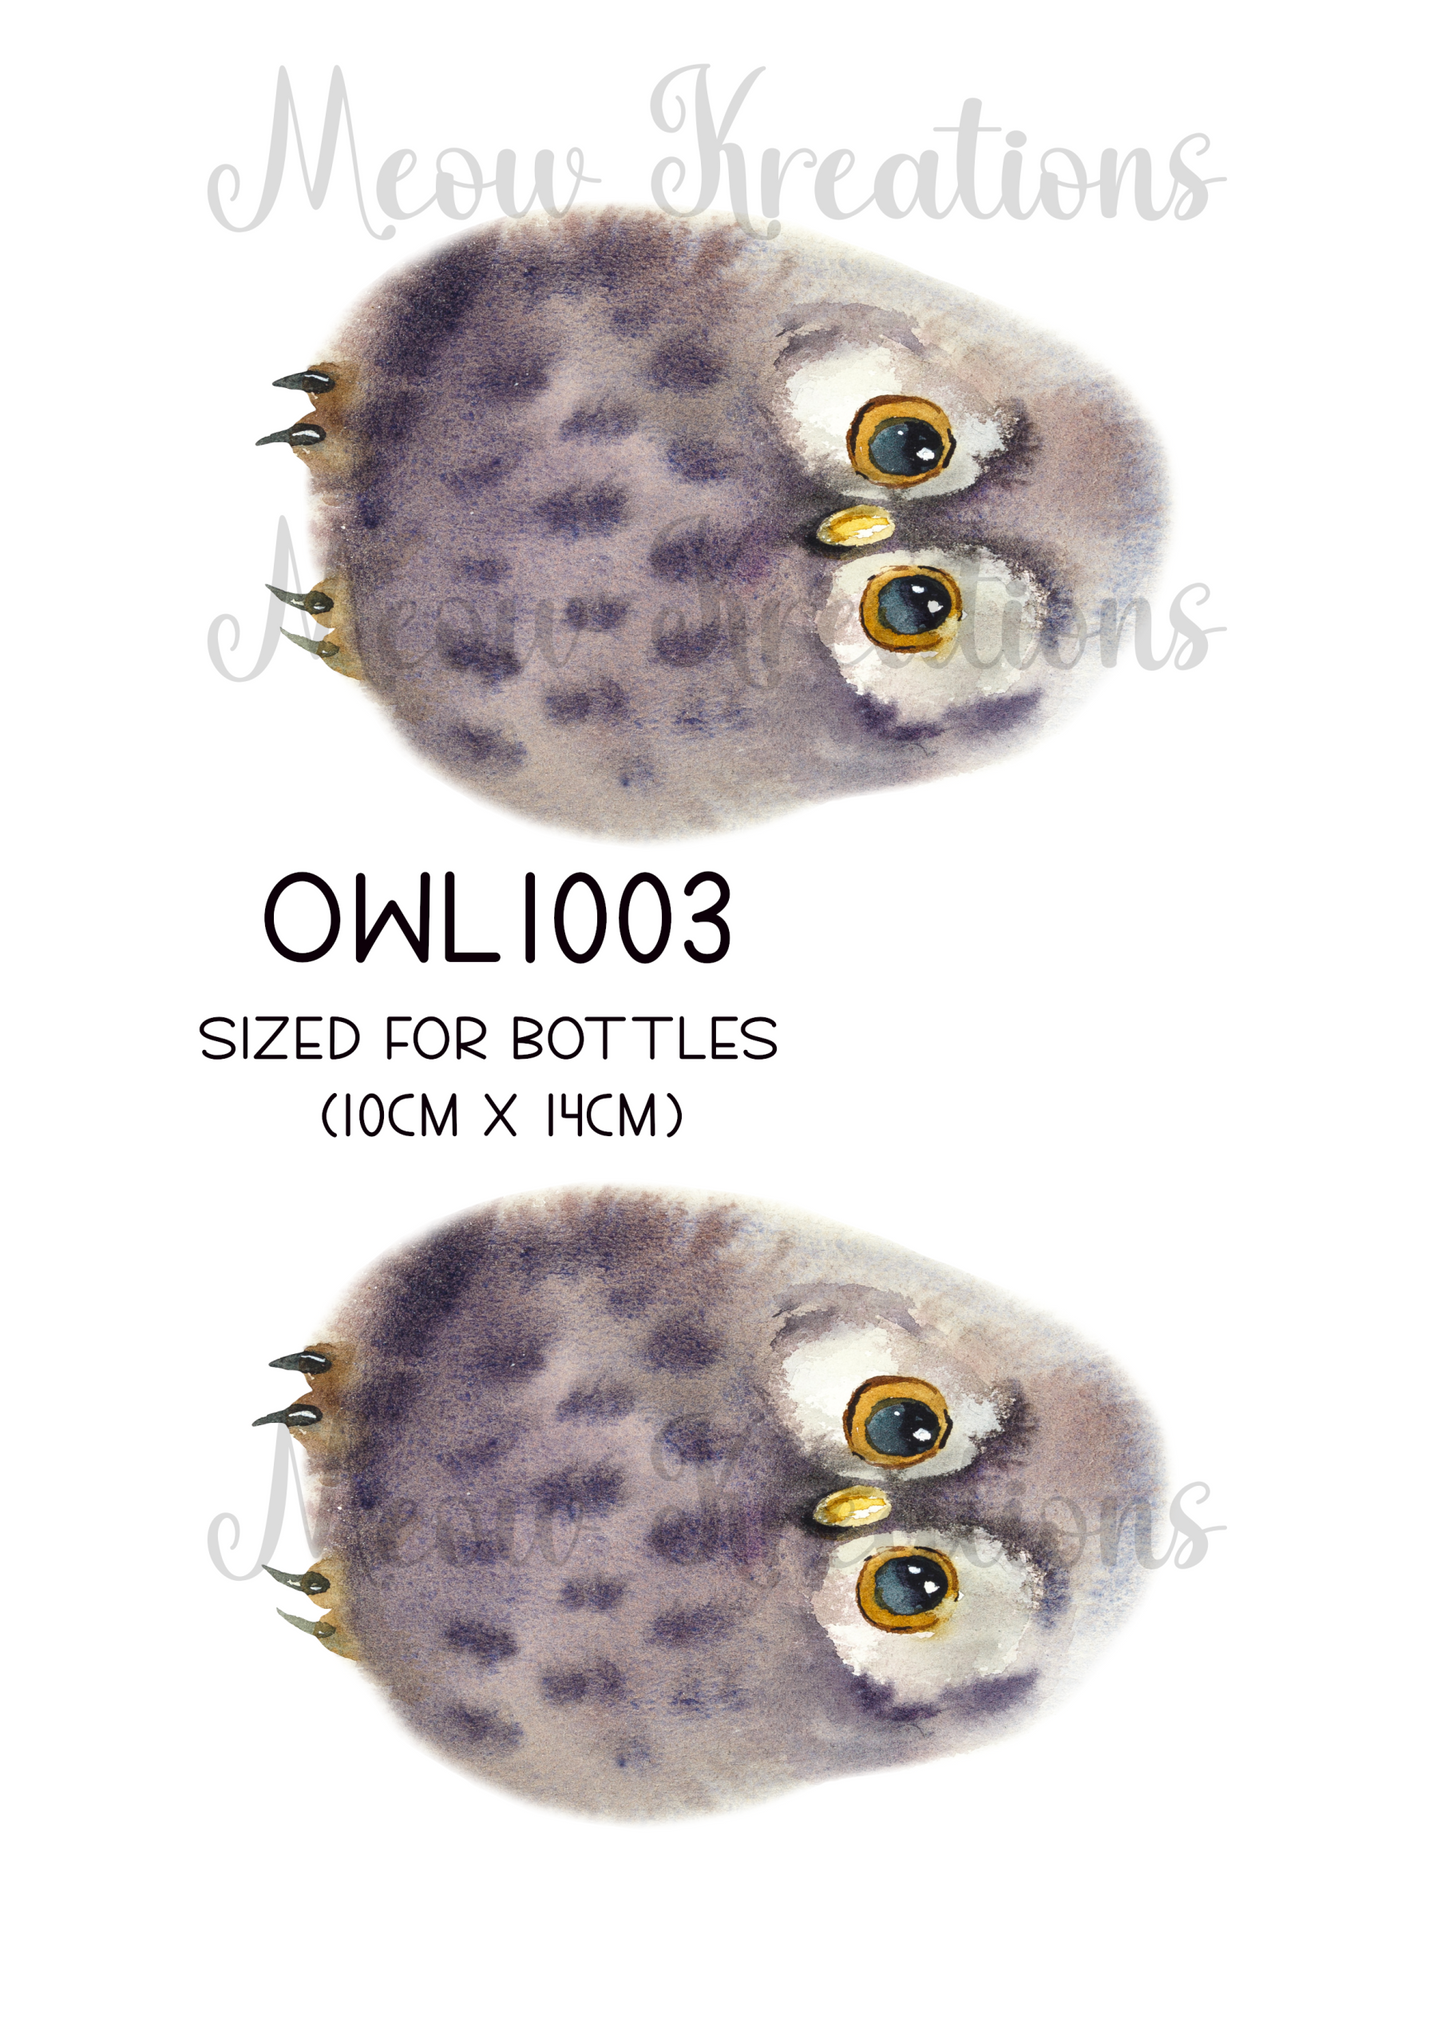 OWL 1003